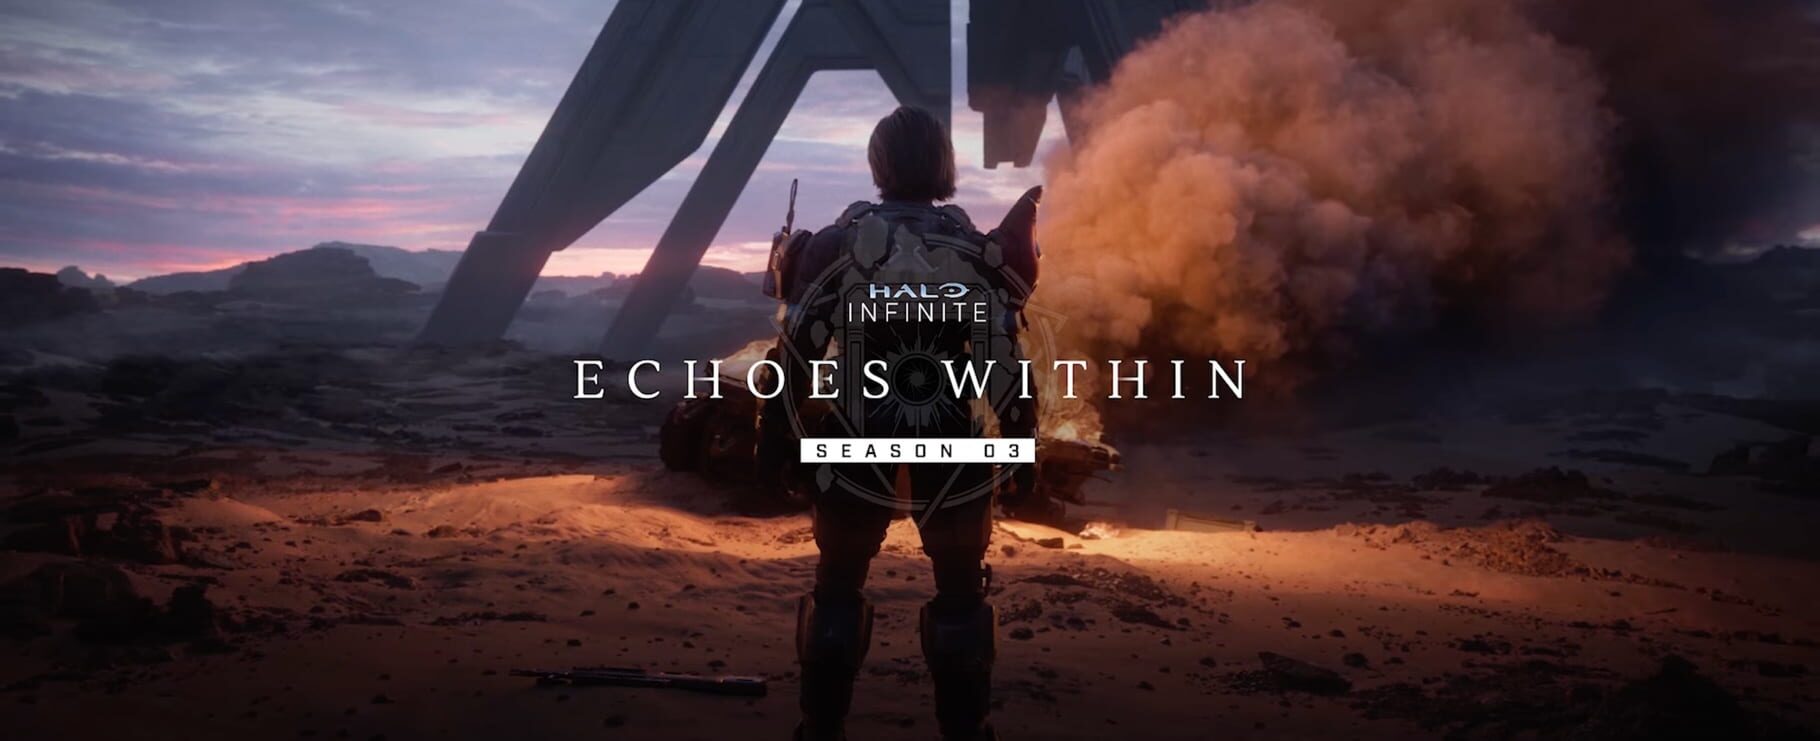 Arte - Halo Infinite: Season 3 - Echoes Within